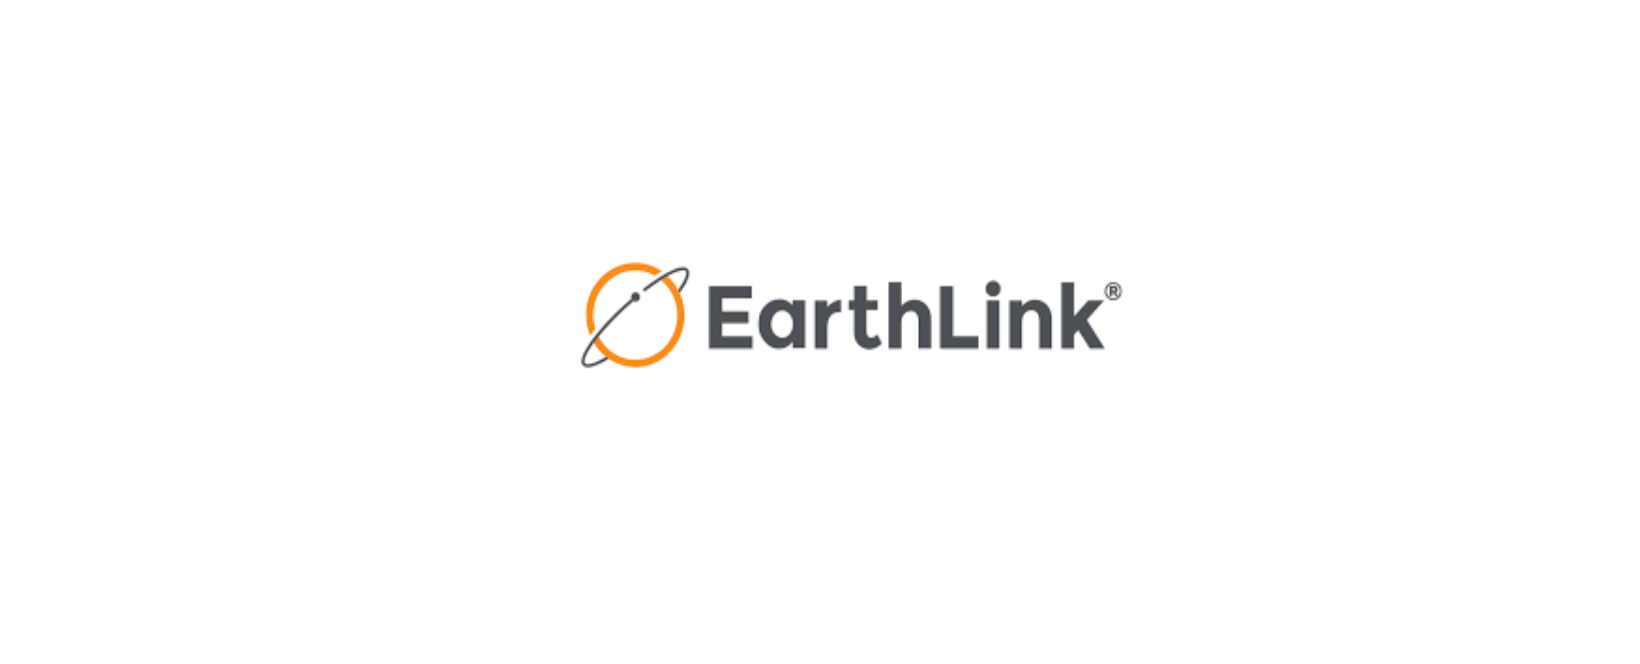 Earth link Discount Code 2022